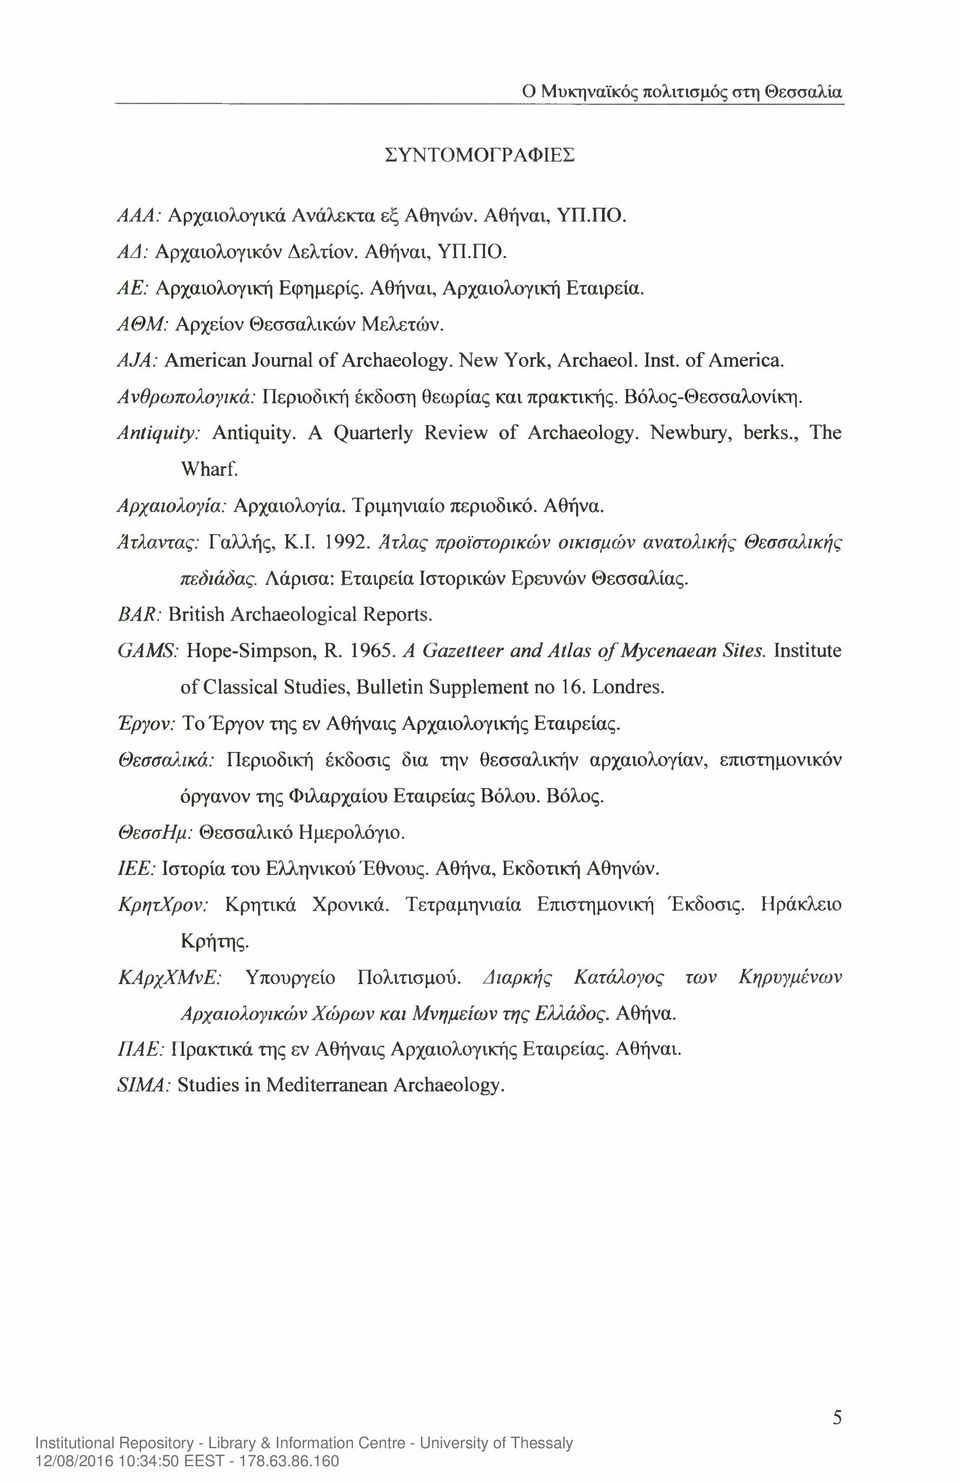 A Quarterly Review of Archaeology. Newbury, berks.. The Wharf. Αρχαιολογία: Αρχαιολογία. Τριμηνιαίο περιοδικό. Αθήνα. Άτλαντας: Γαλλής, Κ.Ι. 1992.